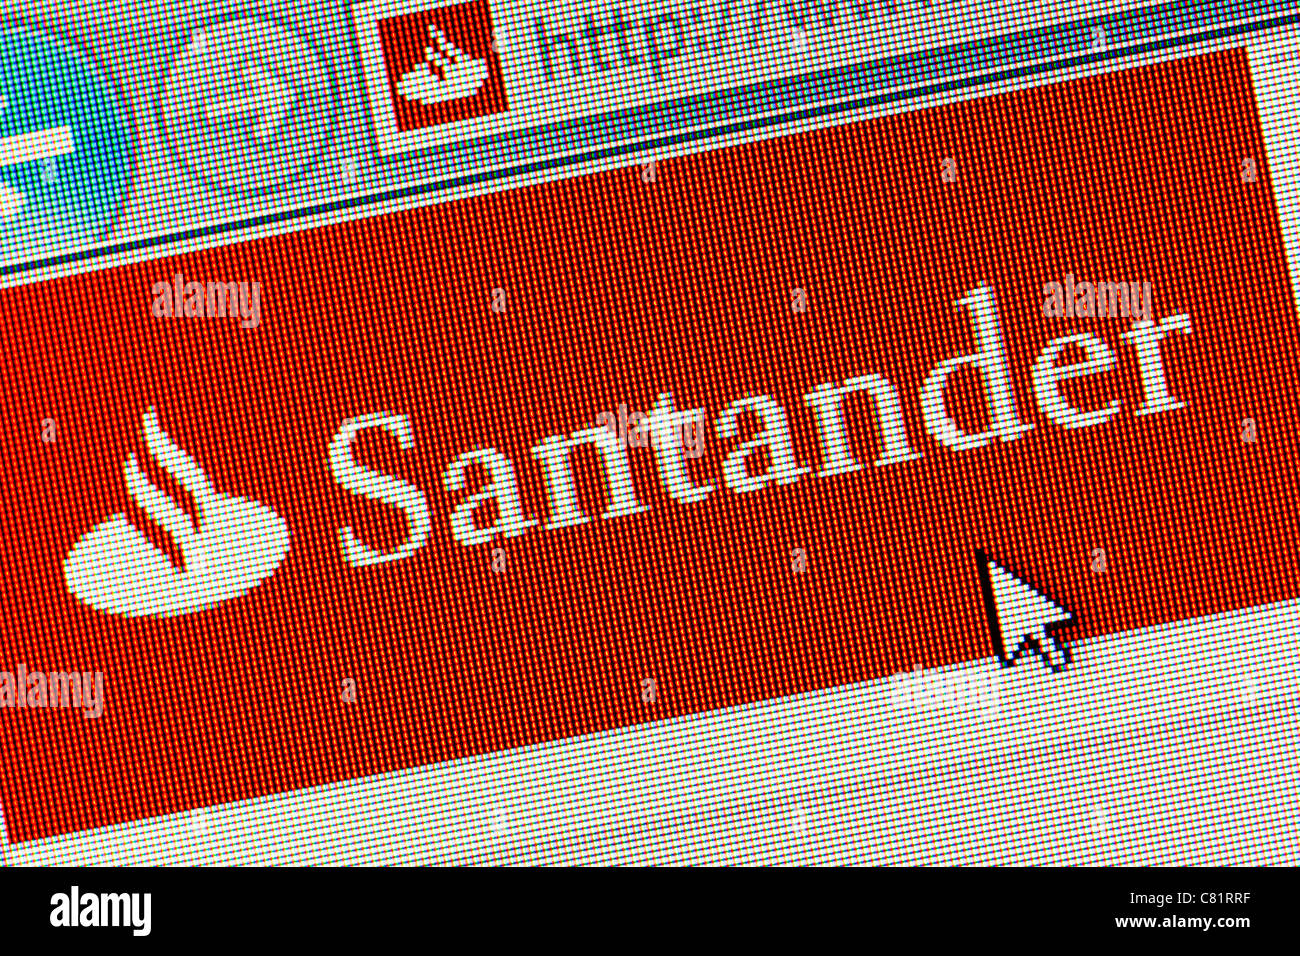 Santander logo and website close up Stock Photo